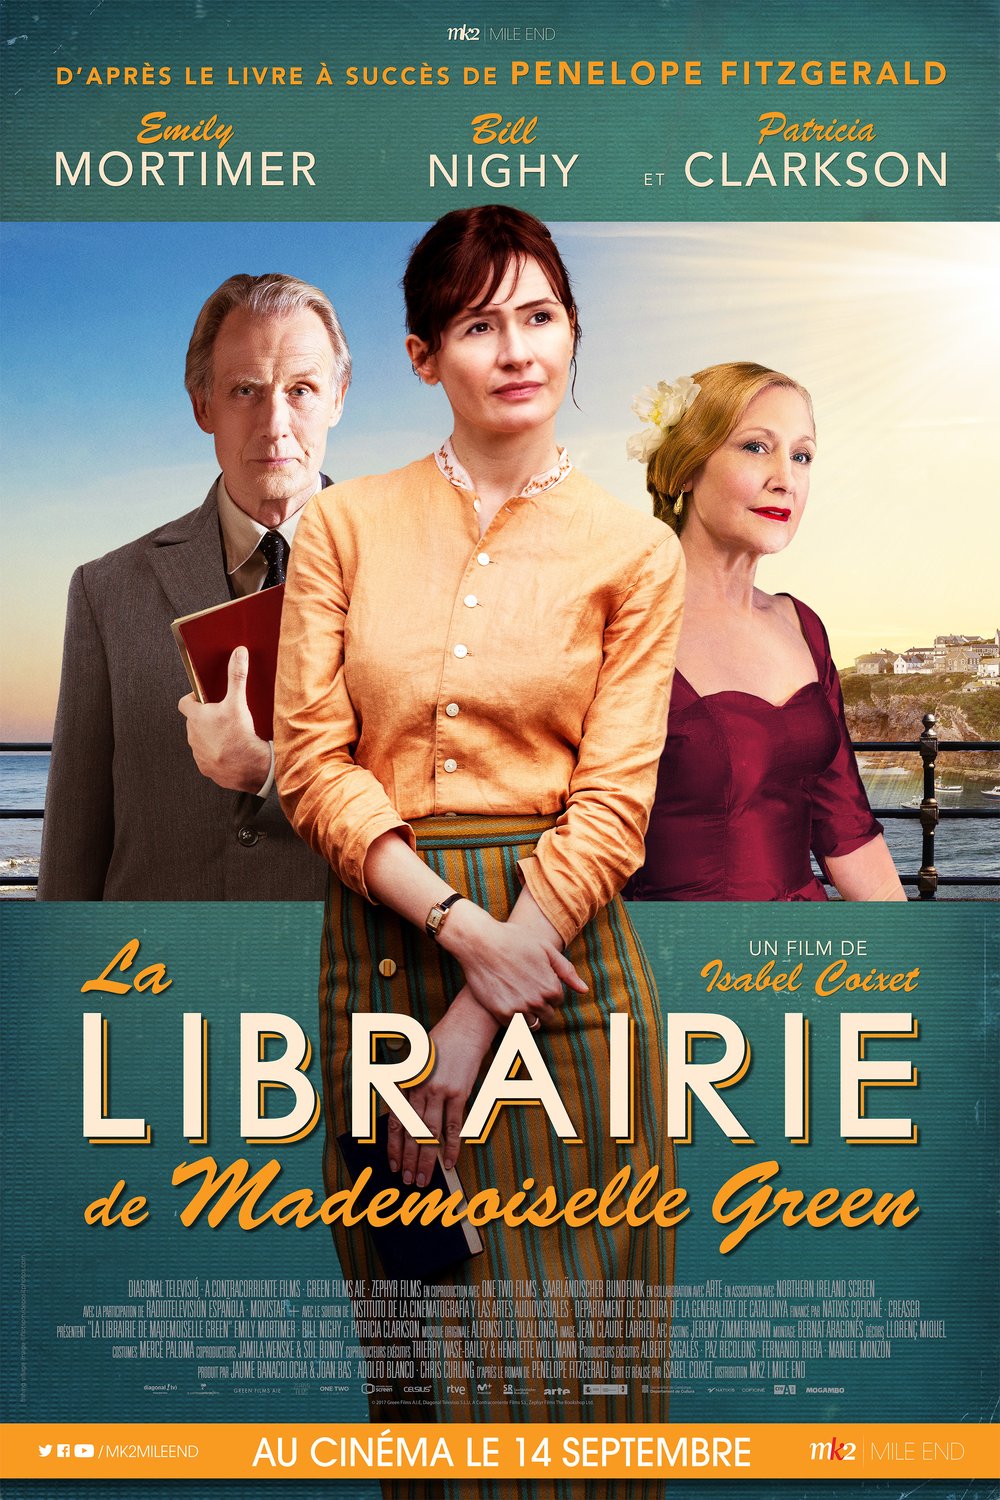 Poster of the movie La Librairie de Mademoiselle Green